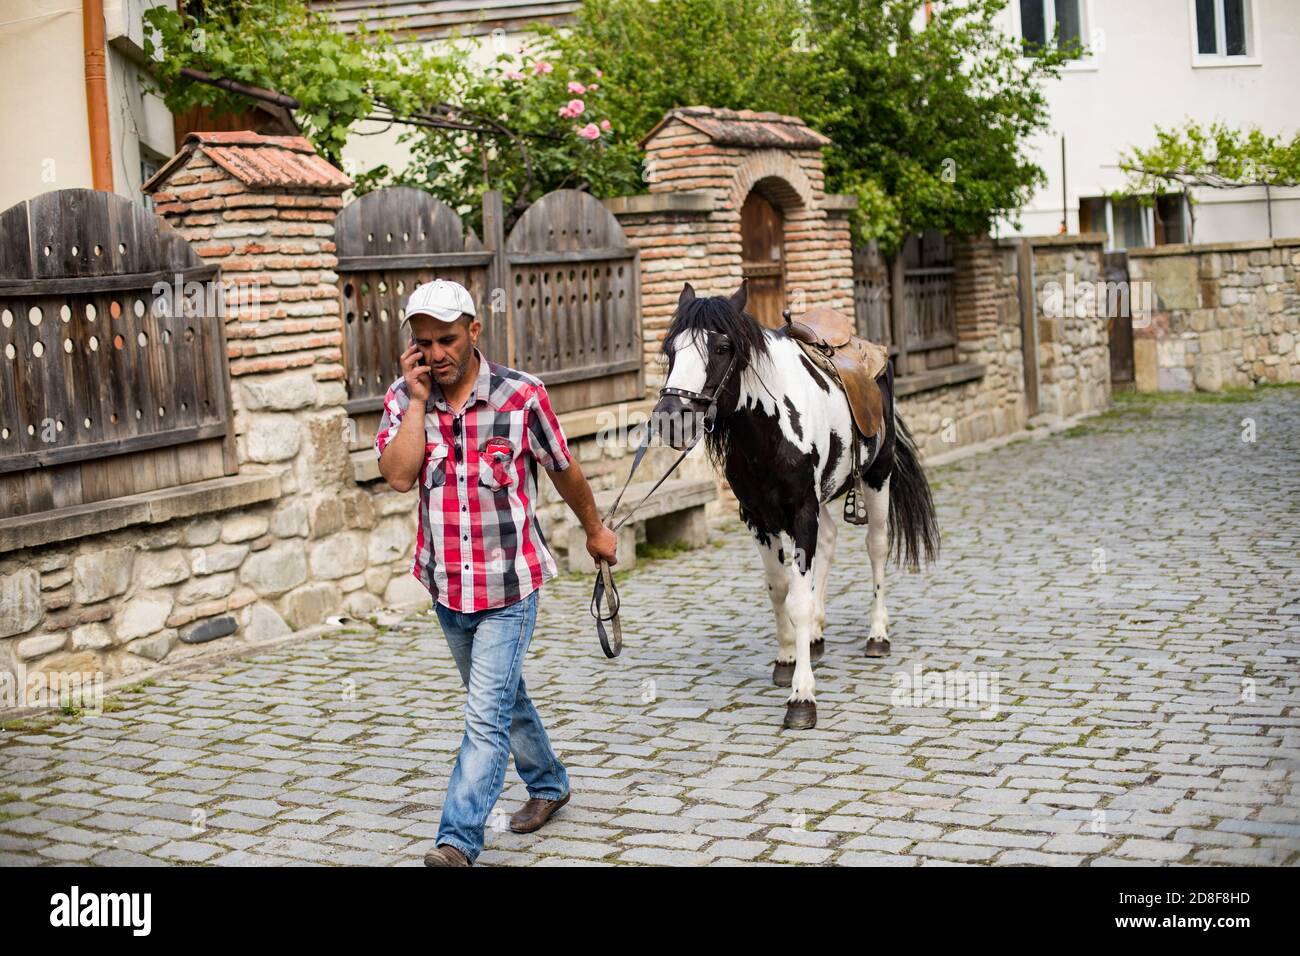 A man talking on a mobile phone leads his horse through the cobblestone streets of Mtskheta, Georgia, Caucasus, Eastern Europe. Stock Photo